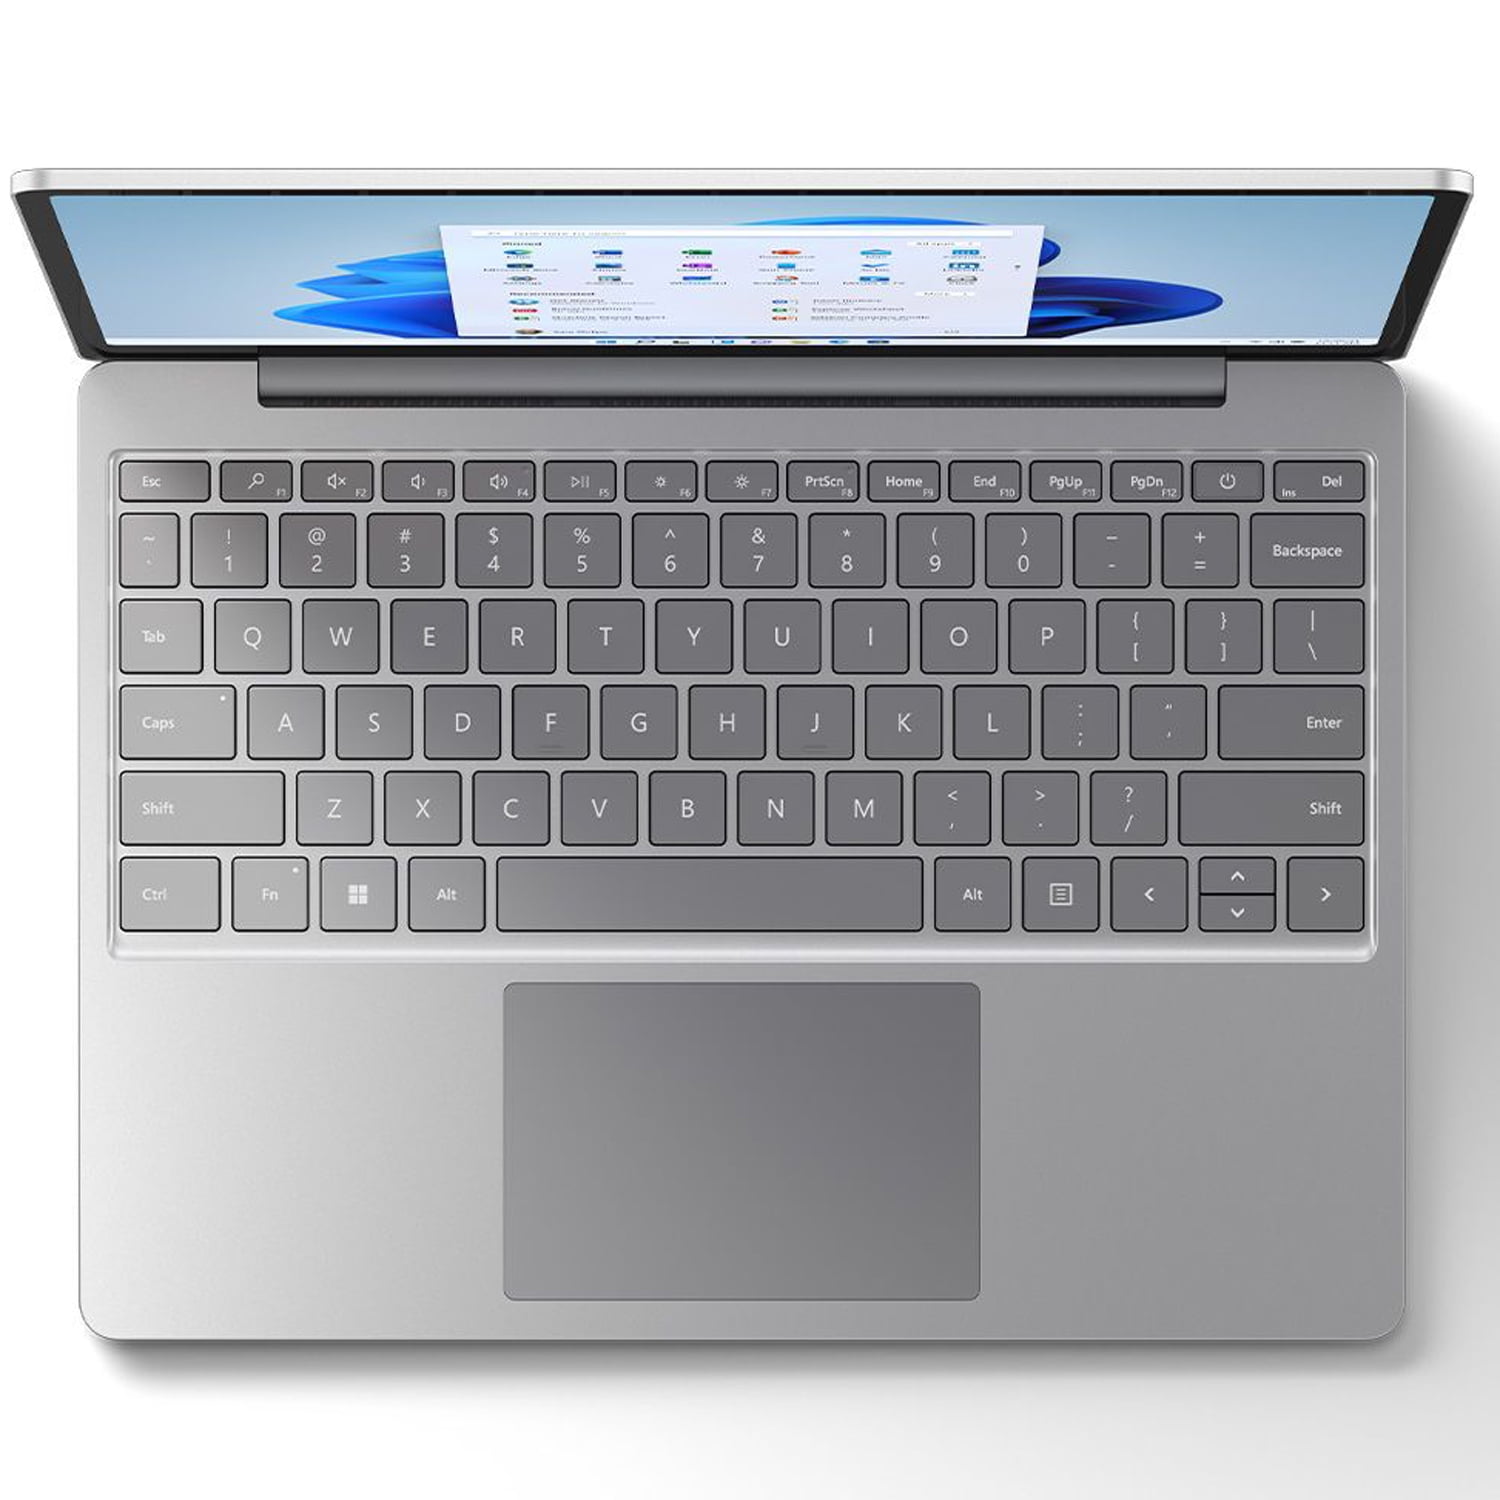 Mirosoft 8QF-00023 Surface Laptop Go 2 12.4